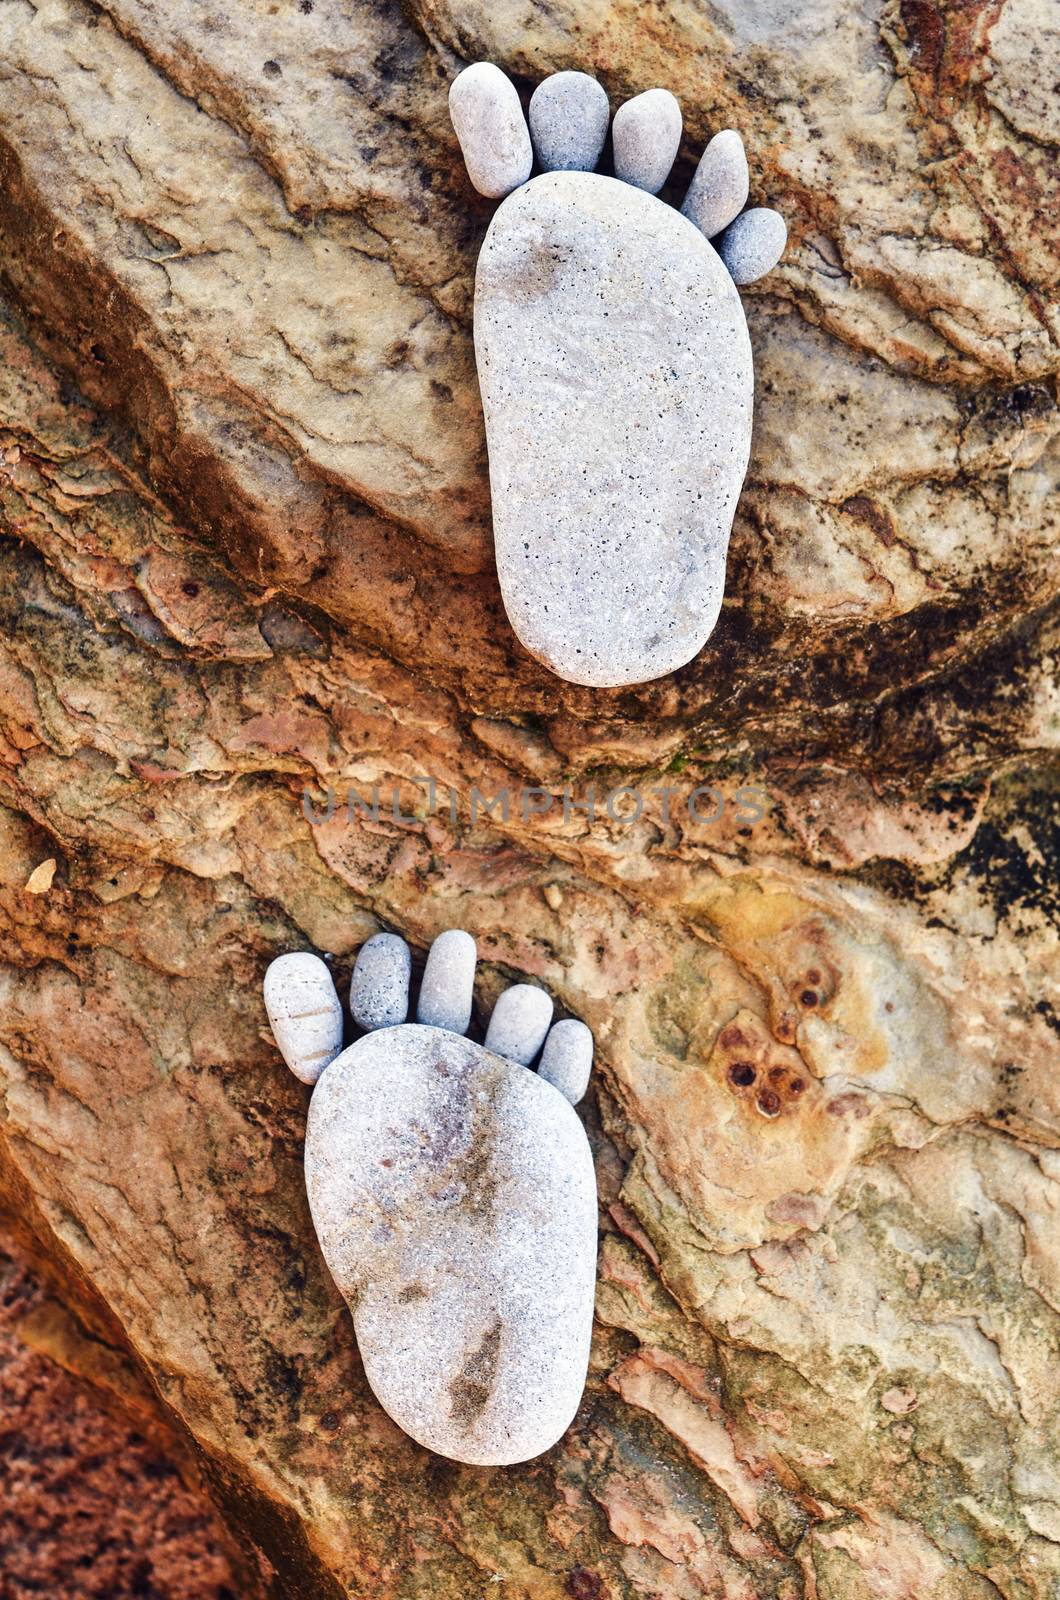 Footprint on stones by styf22